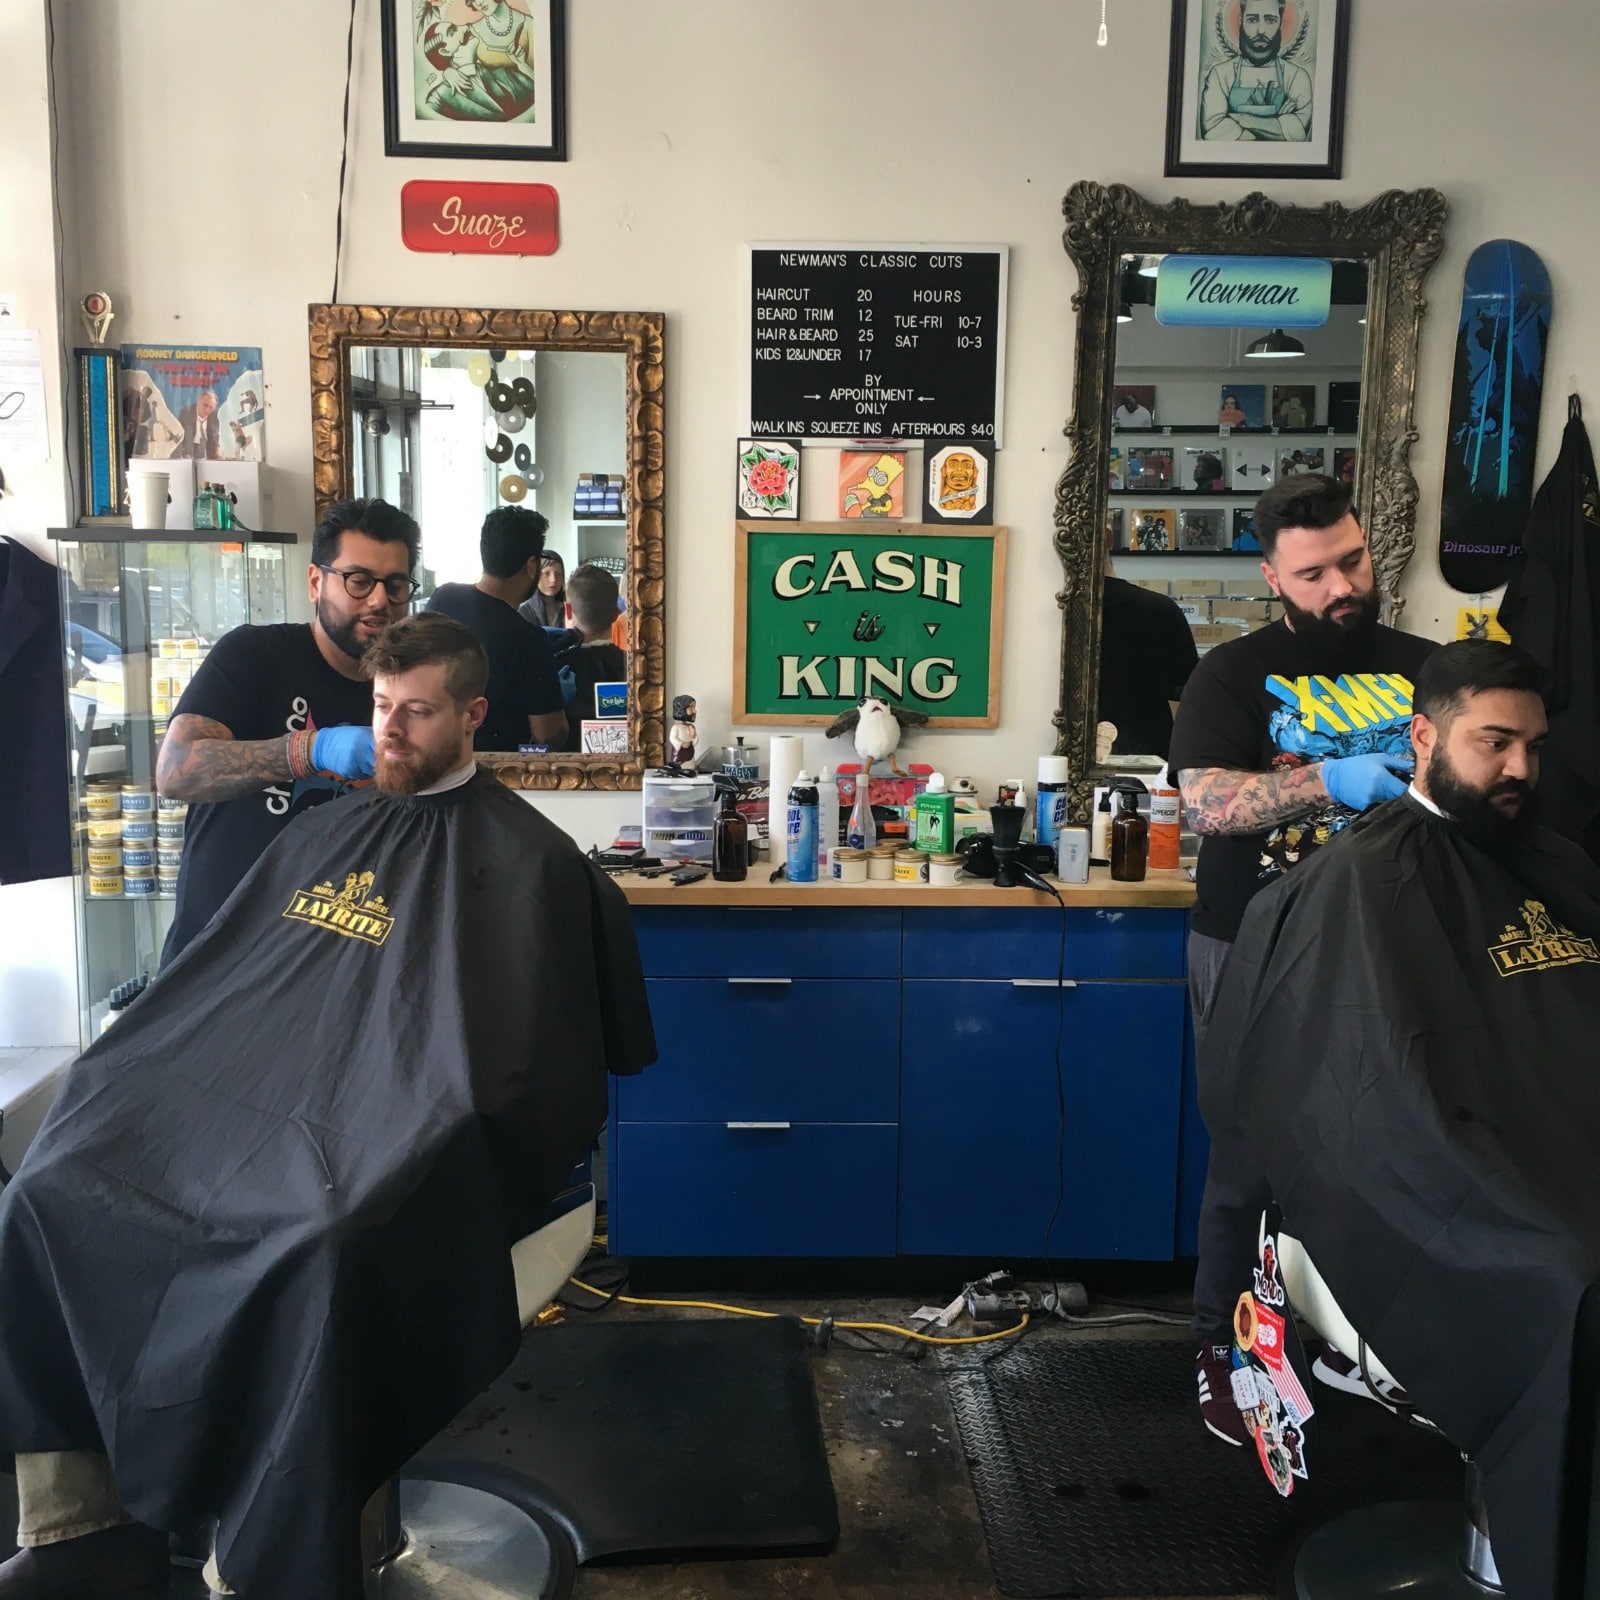 Newman's Classic Cuts is one of 5 Birmingham barbershops